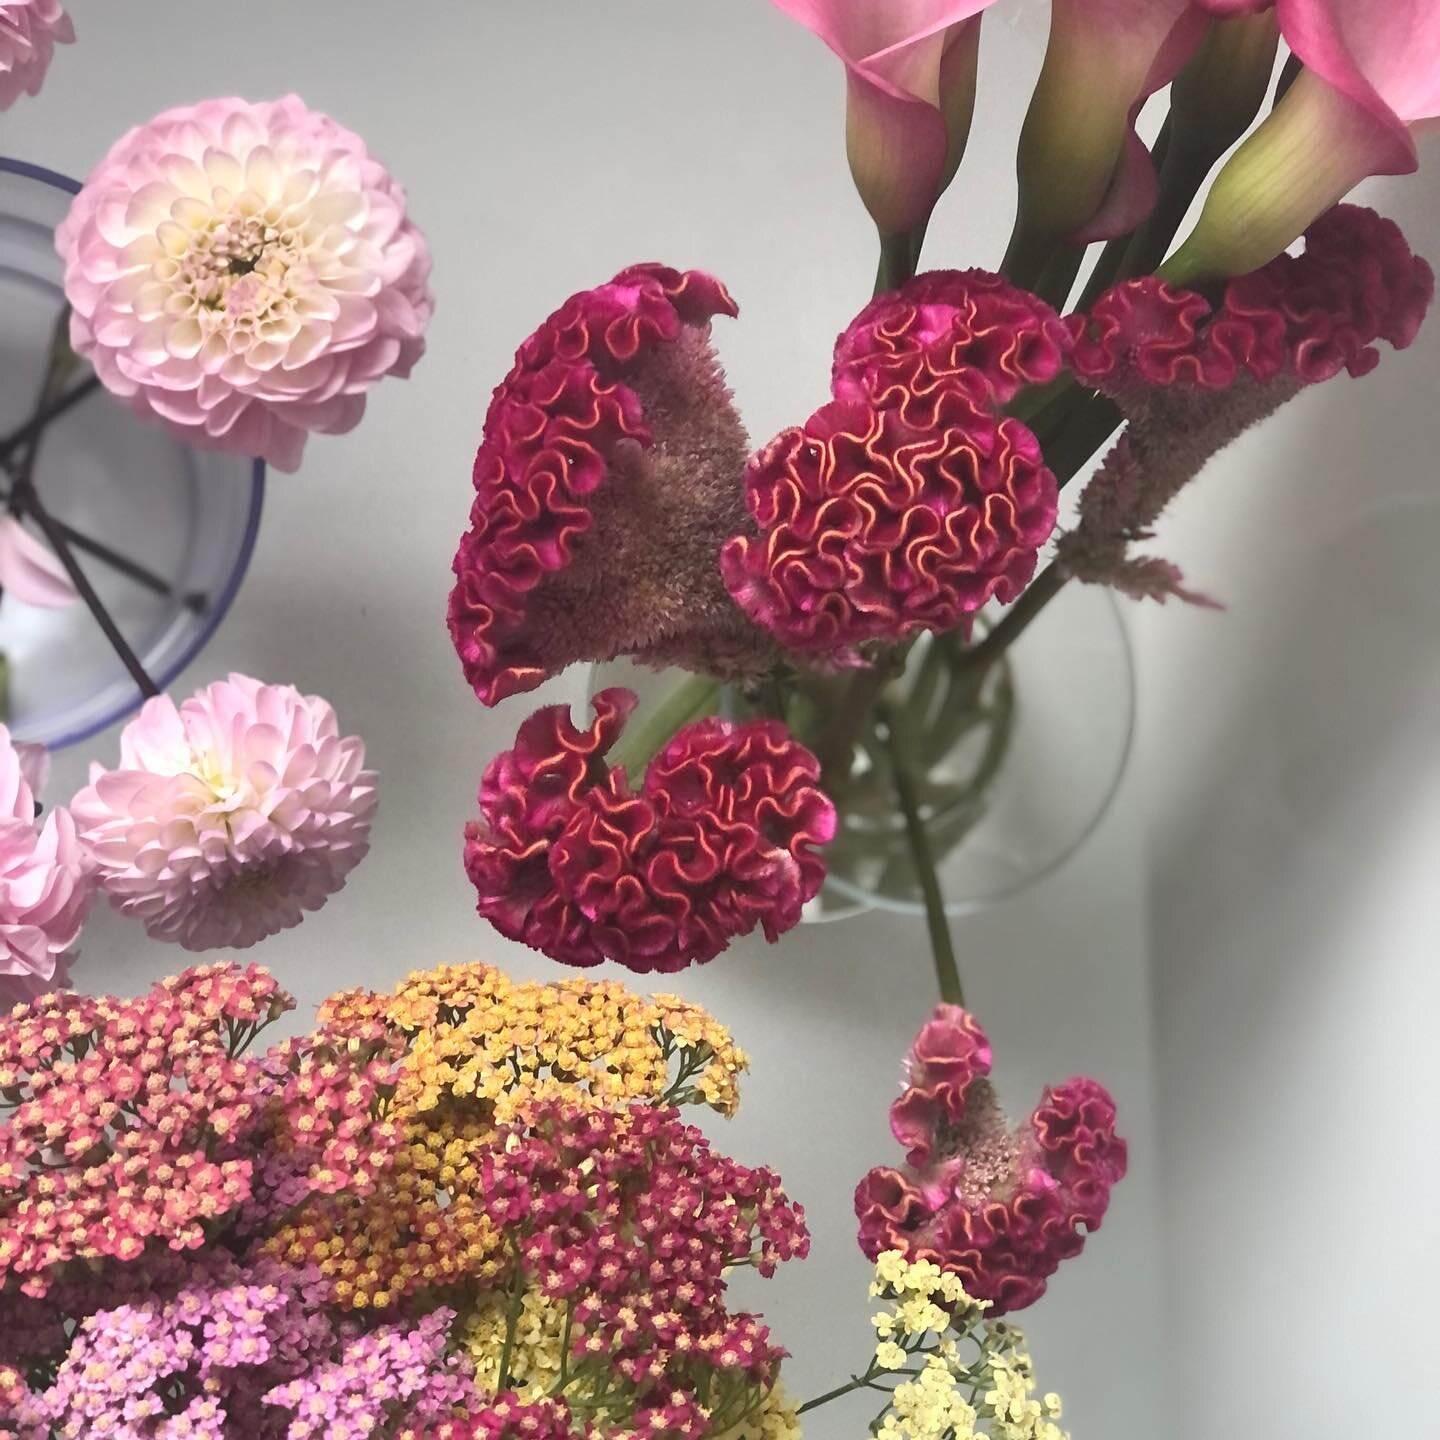 Abstract 🍬

#flatlay
#underthefloralspell 
#flowers
#floristlife
#birminghamflorist
#moseleyflorist
#digbethflorist
#kingsheathflorist